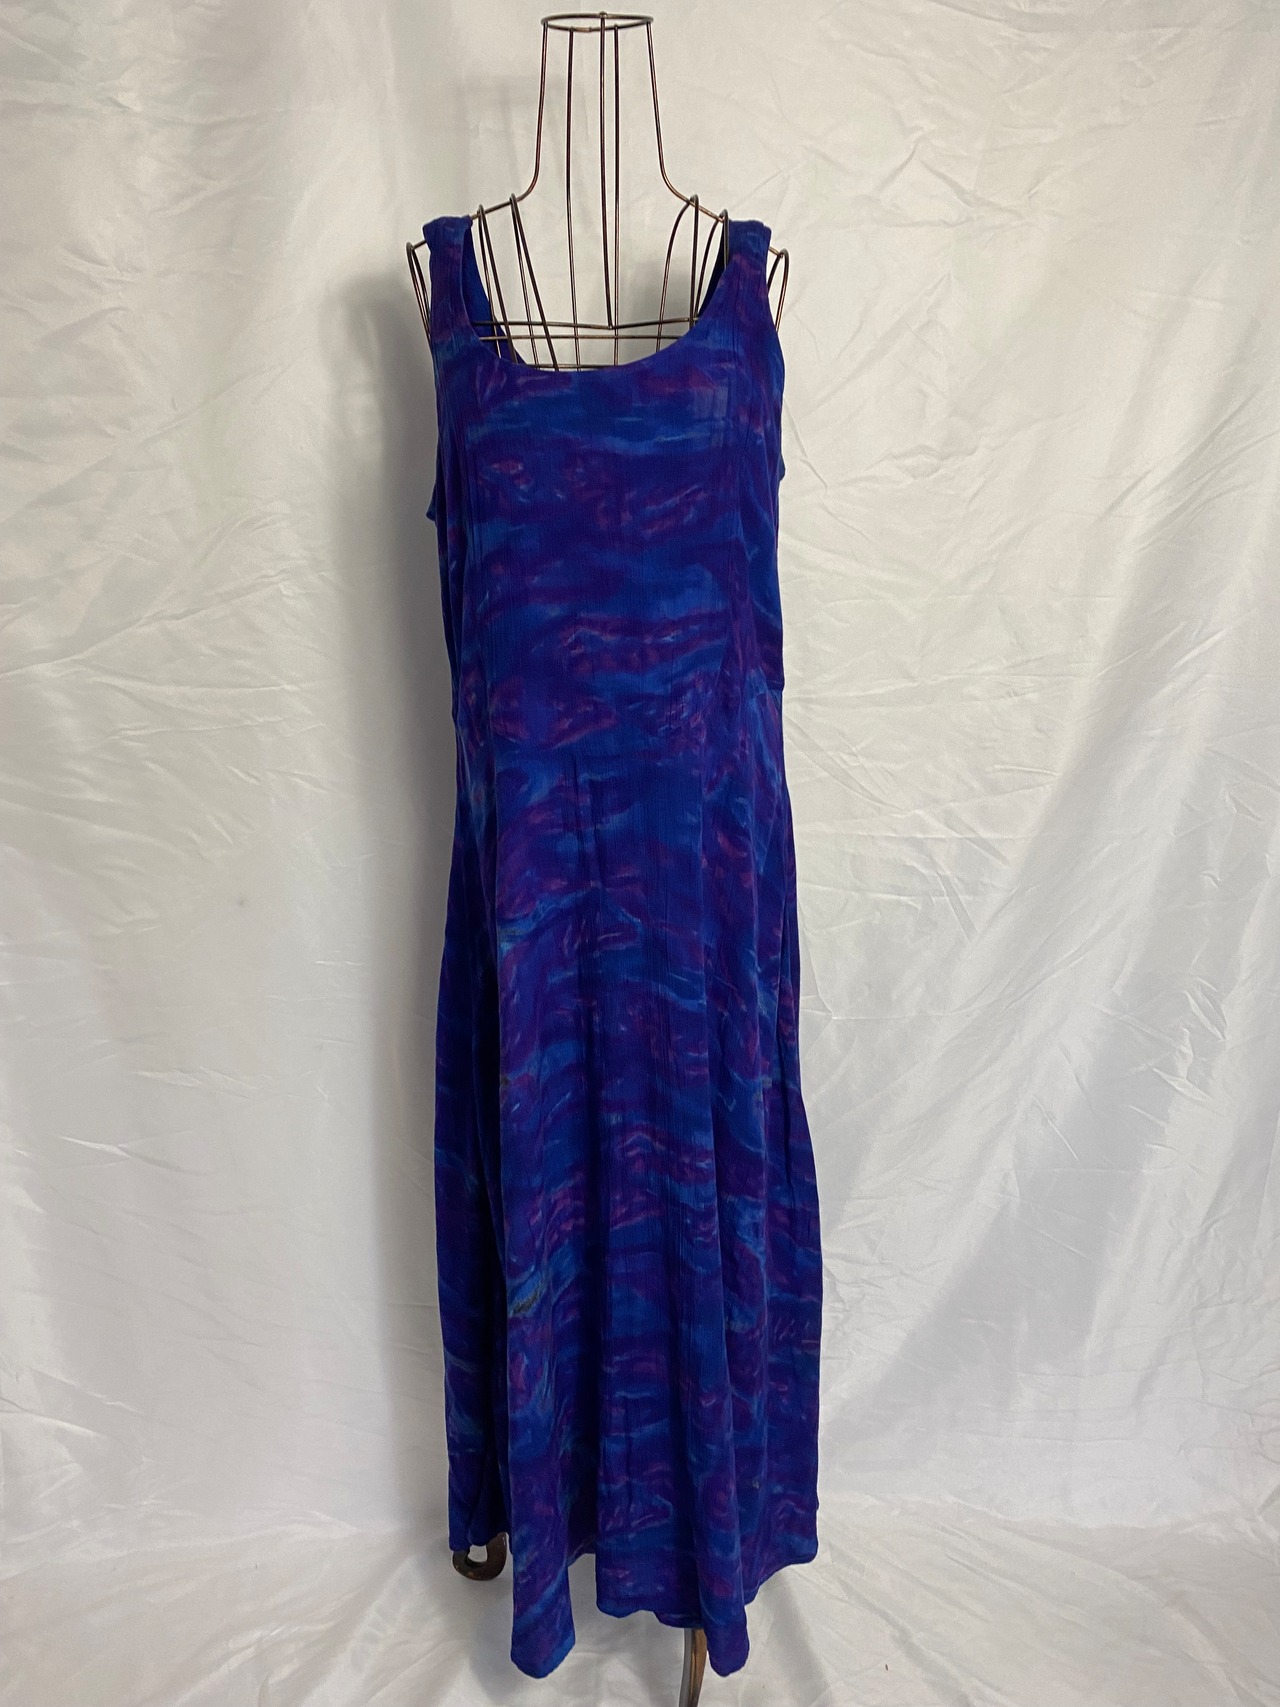 90’s Sleeveless dress Made in U.S.A